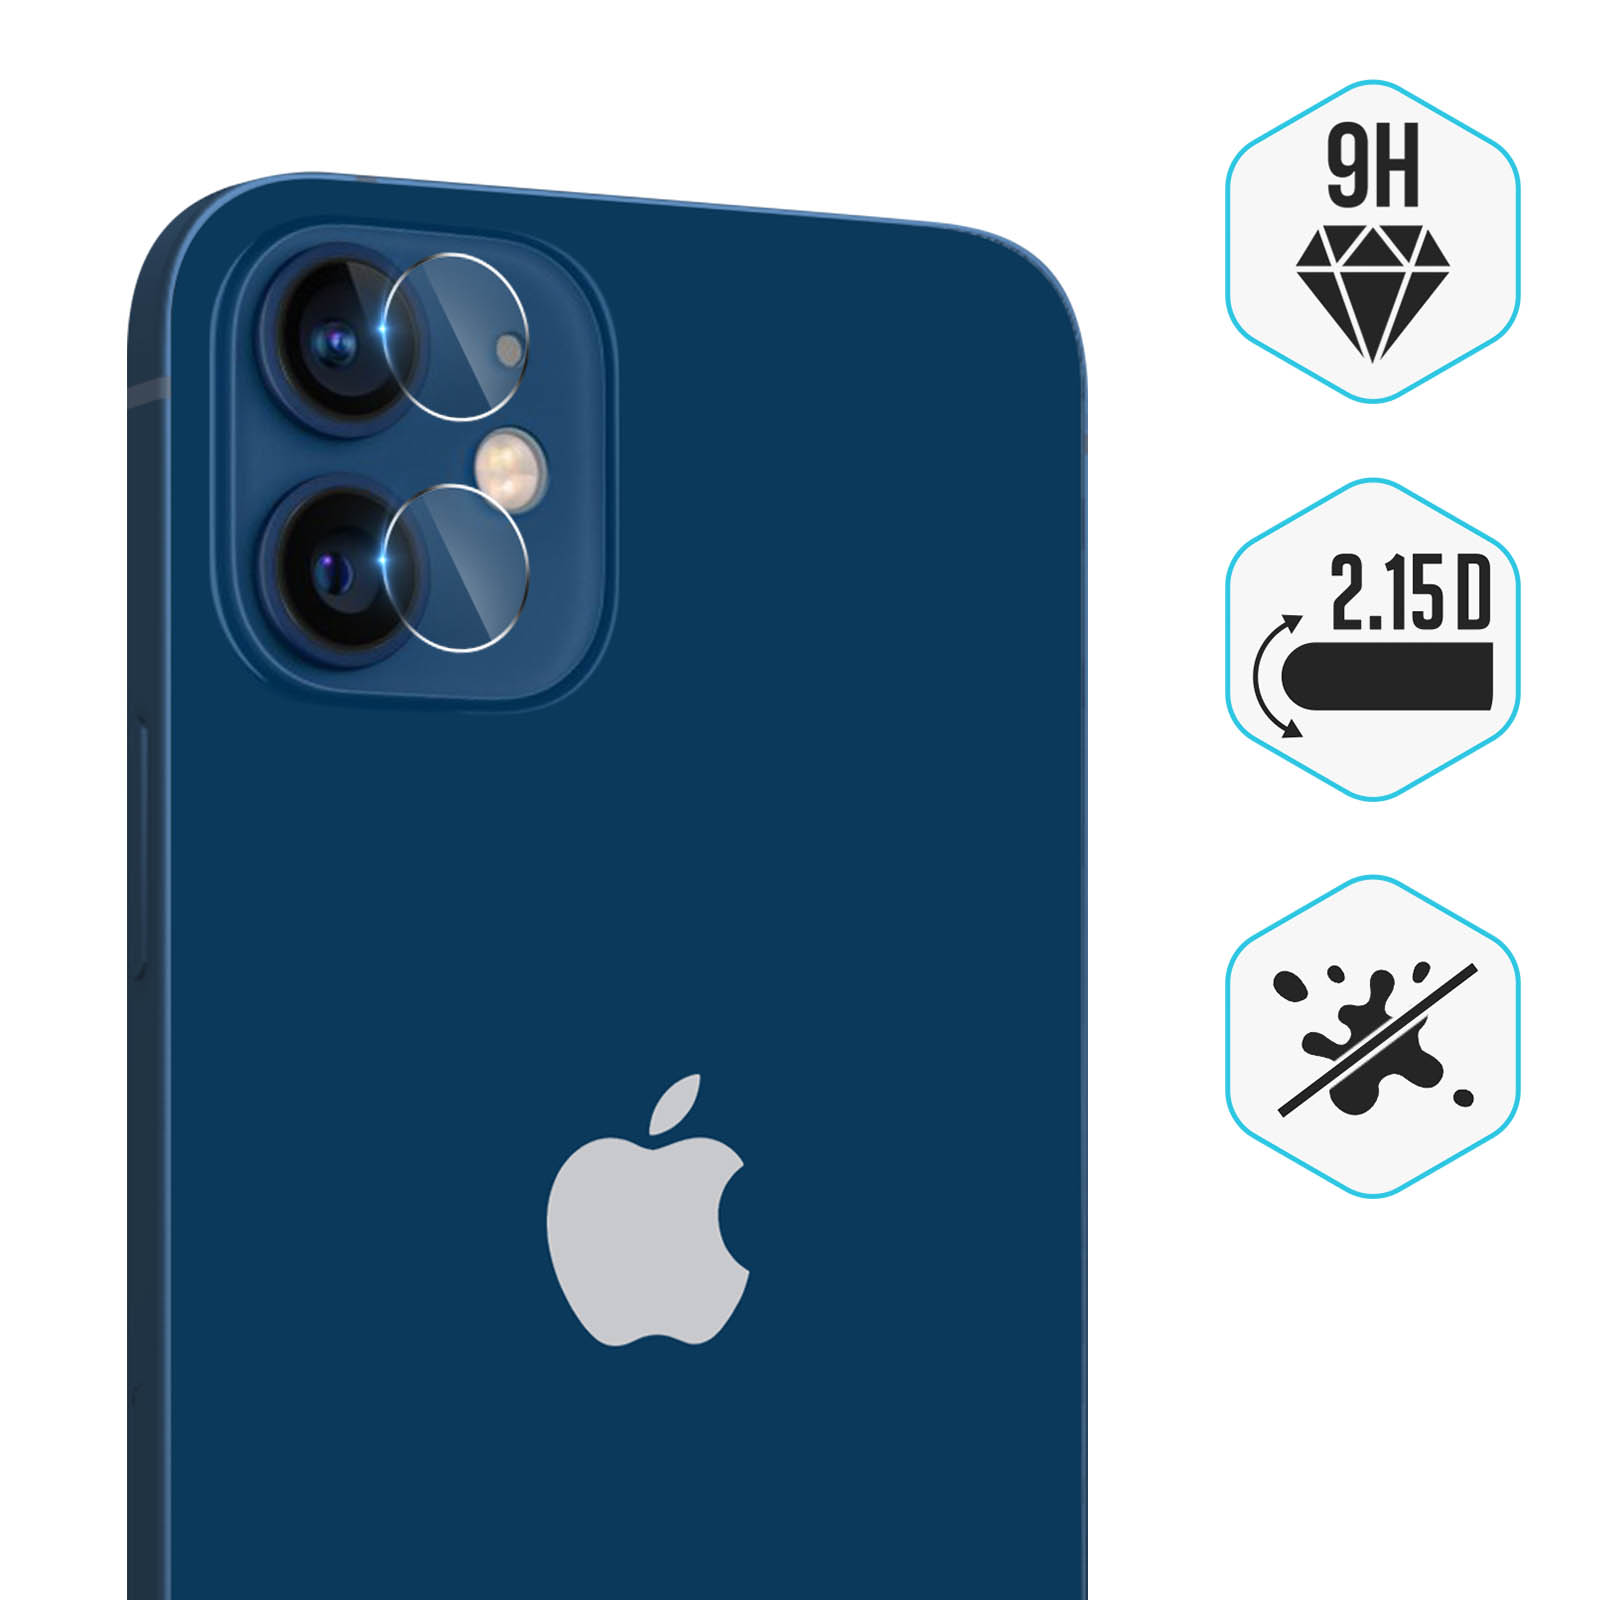 Protector Cámara iPhone 12 / 12 Mini Cristal Templado Resistente